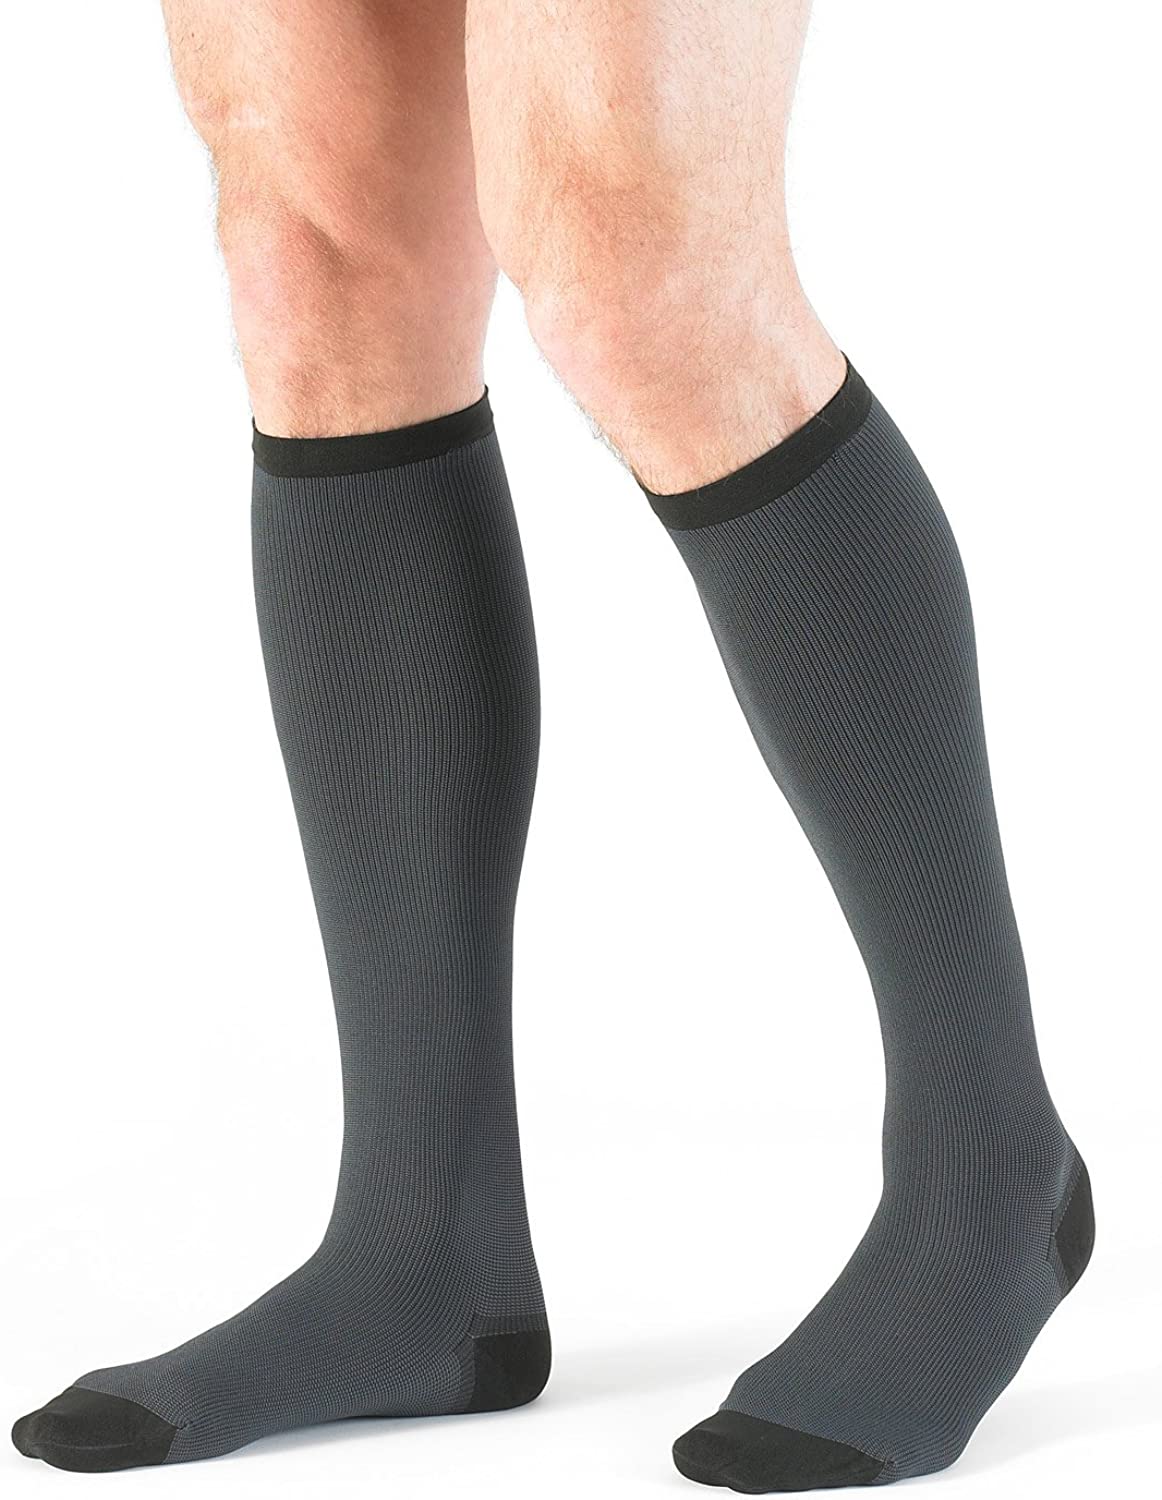 men's compression socks for edema 2